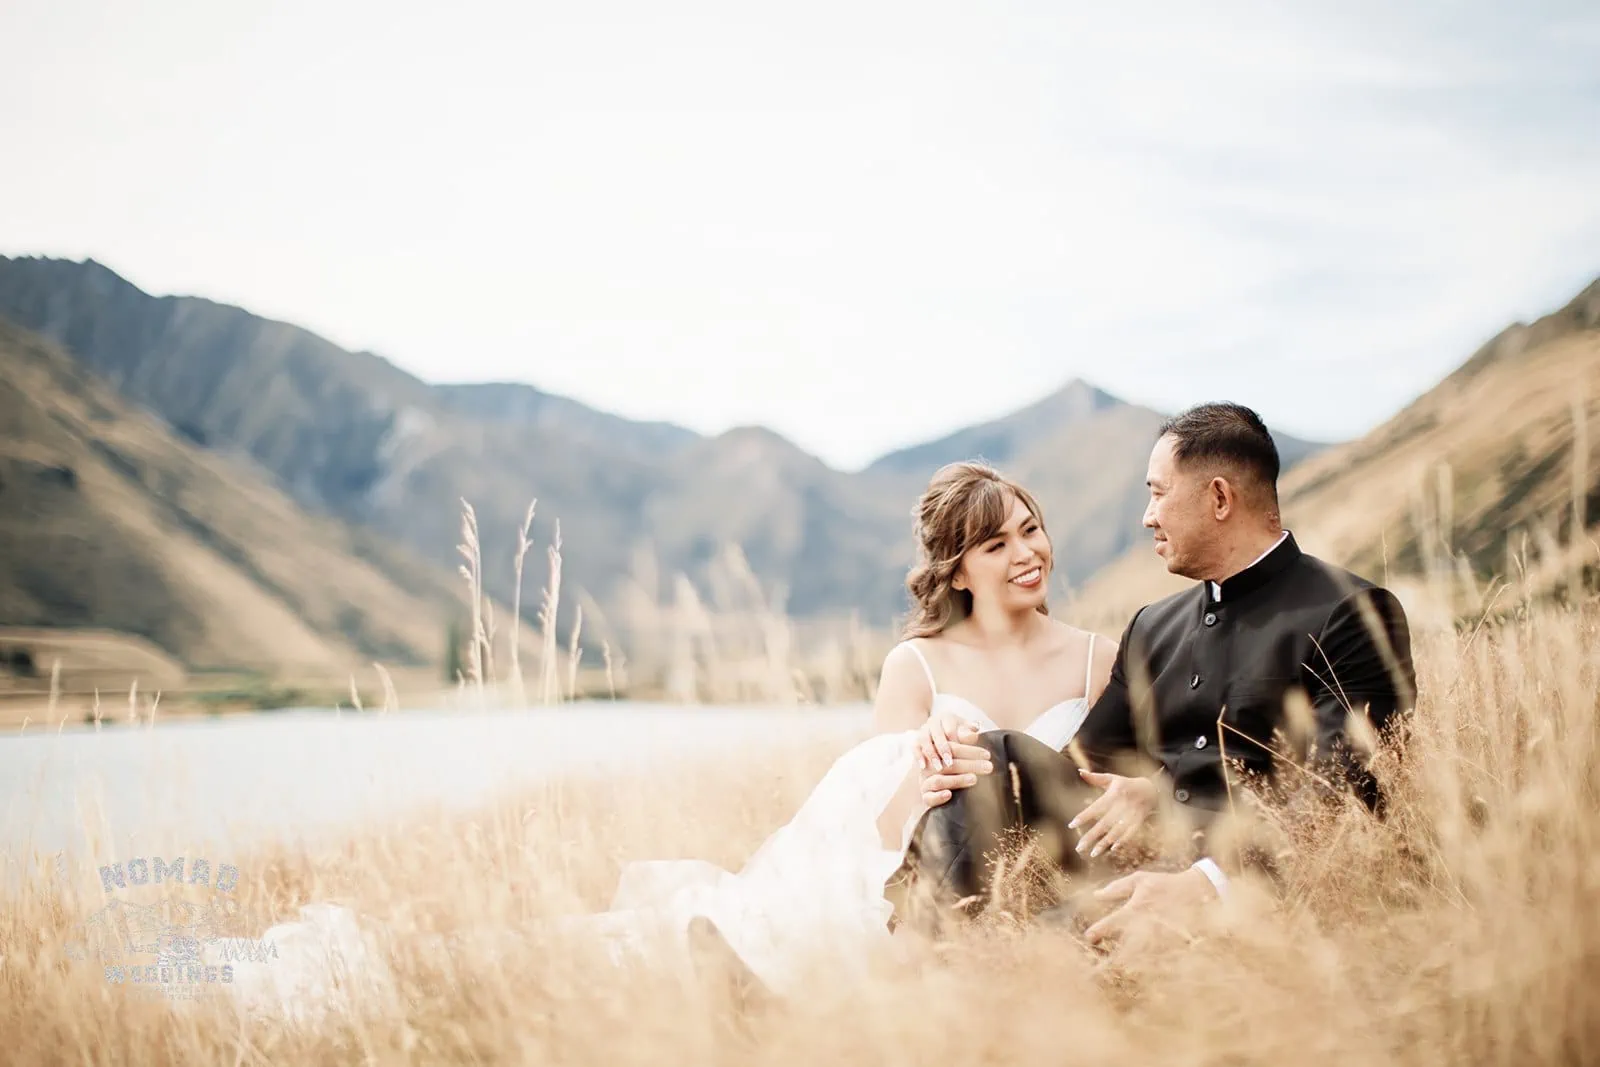 Nhi & Nicholas' pre-wedding shoot set near a lake in Queenstown, NZ.